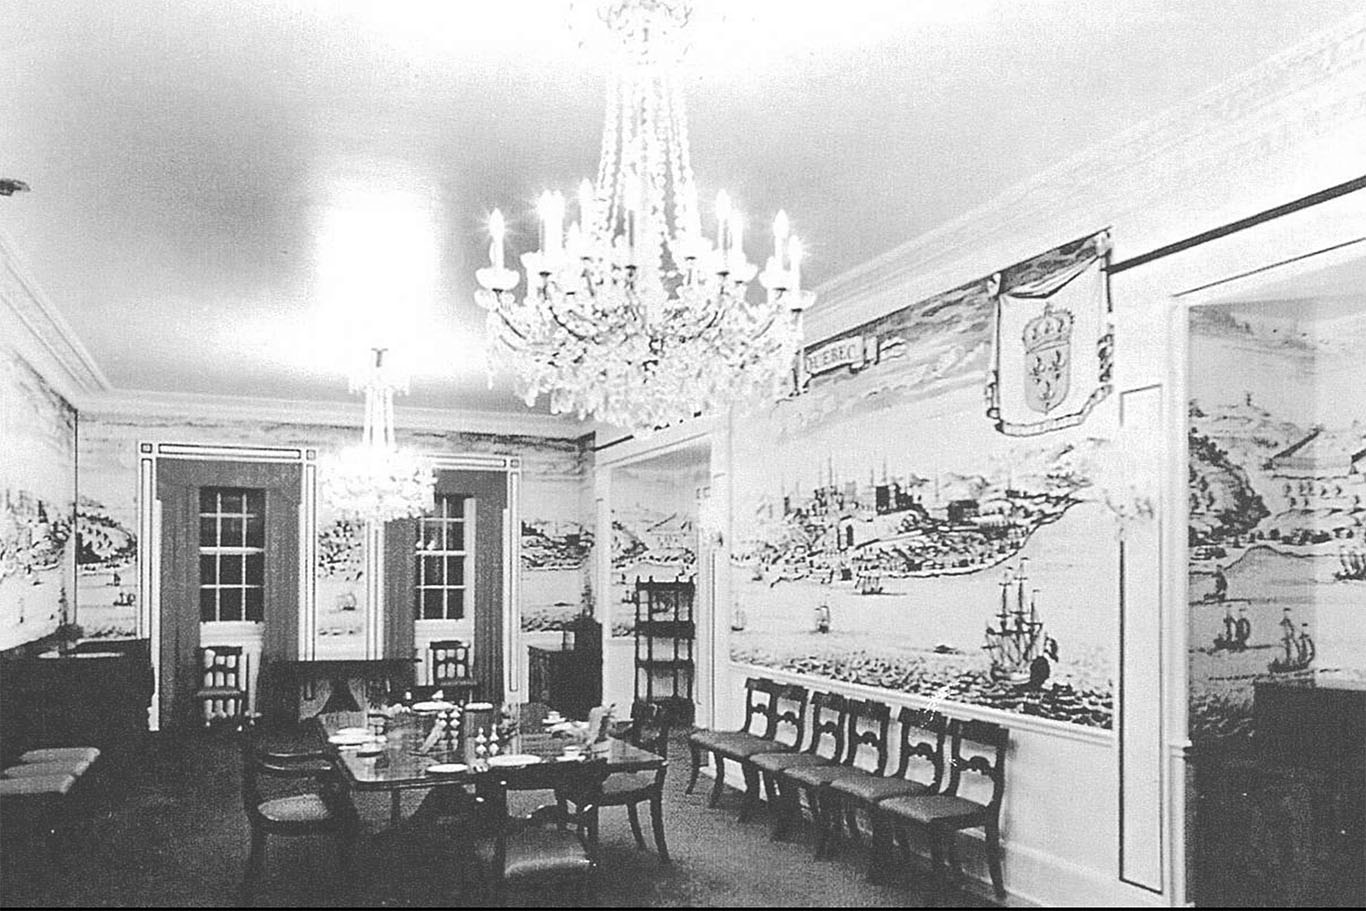 Dining Room, circa 1960